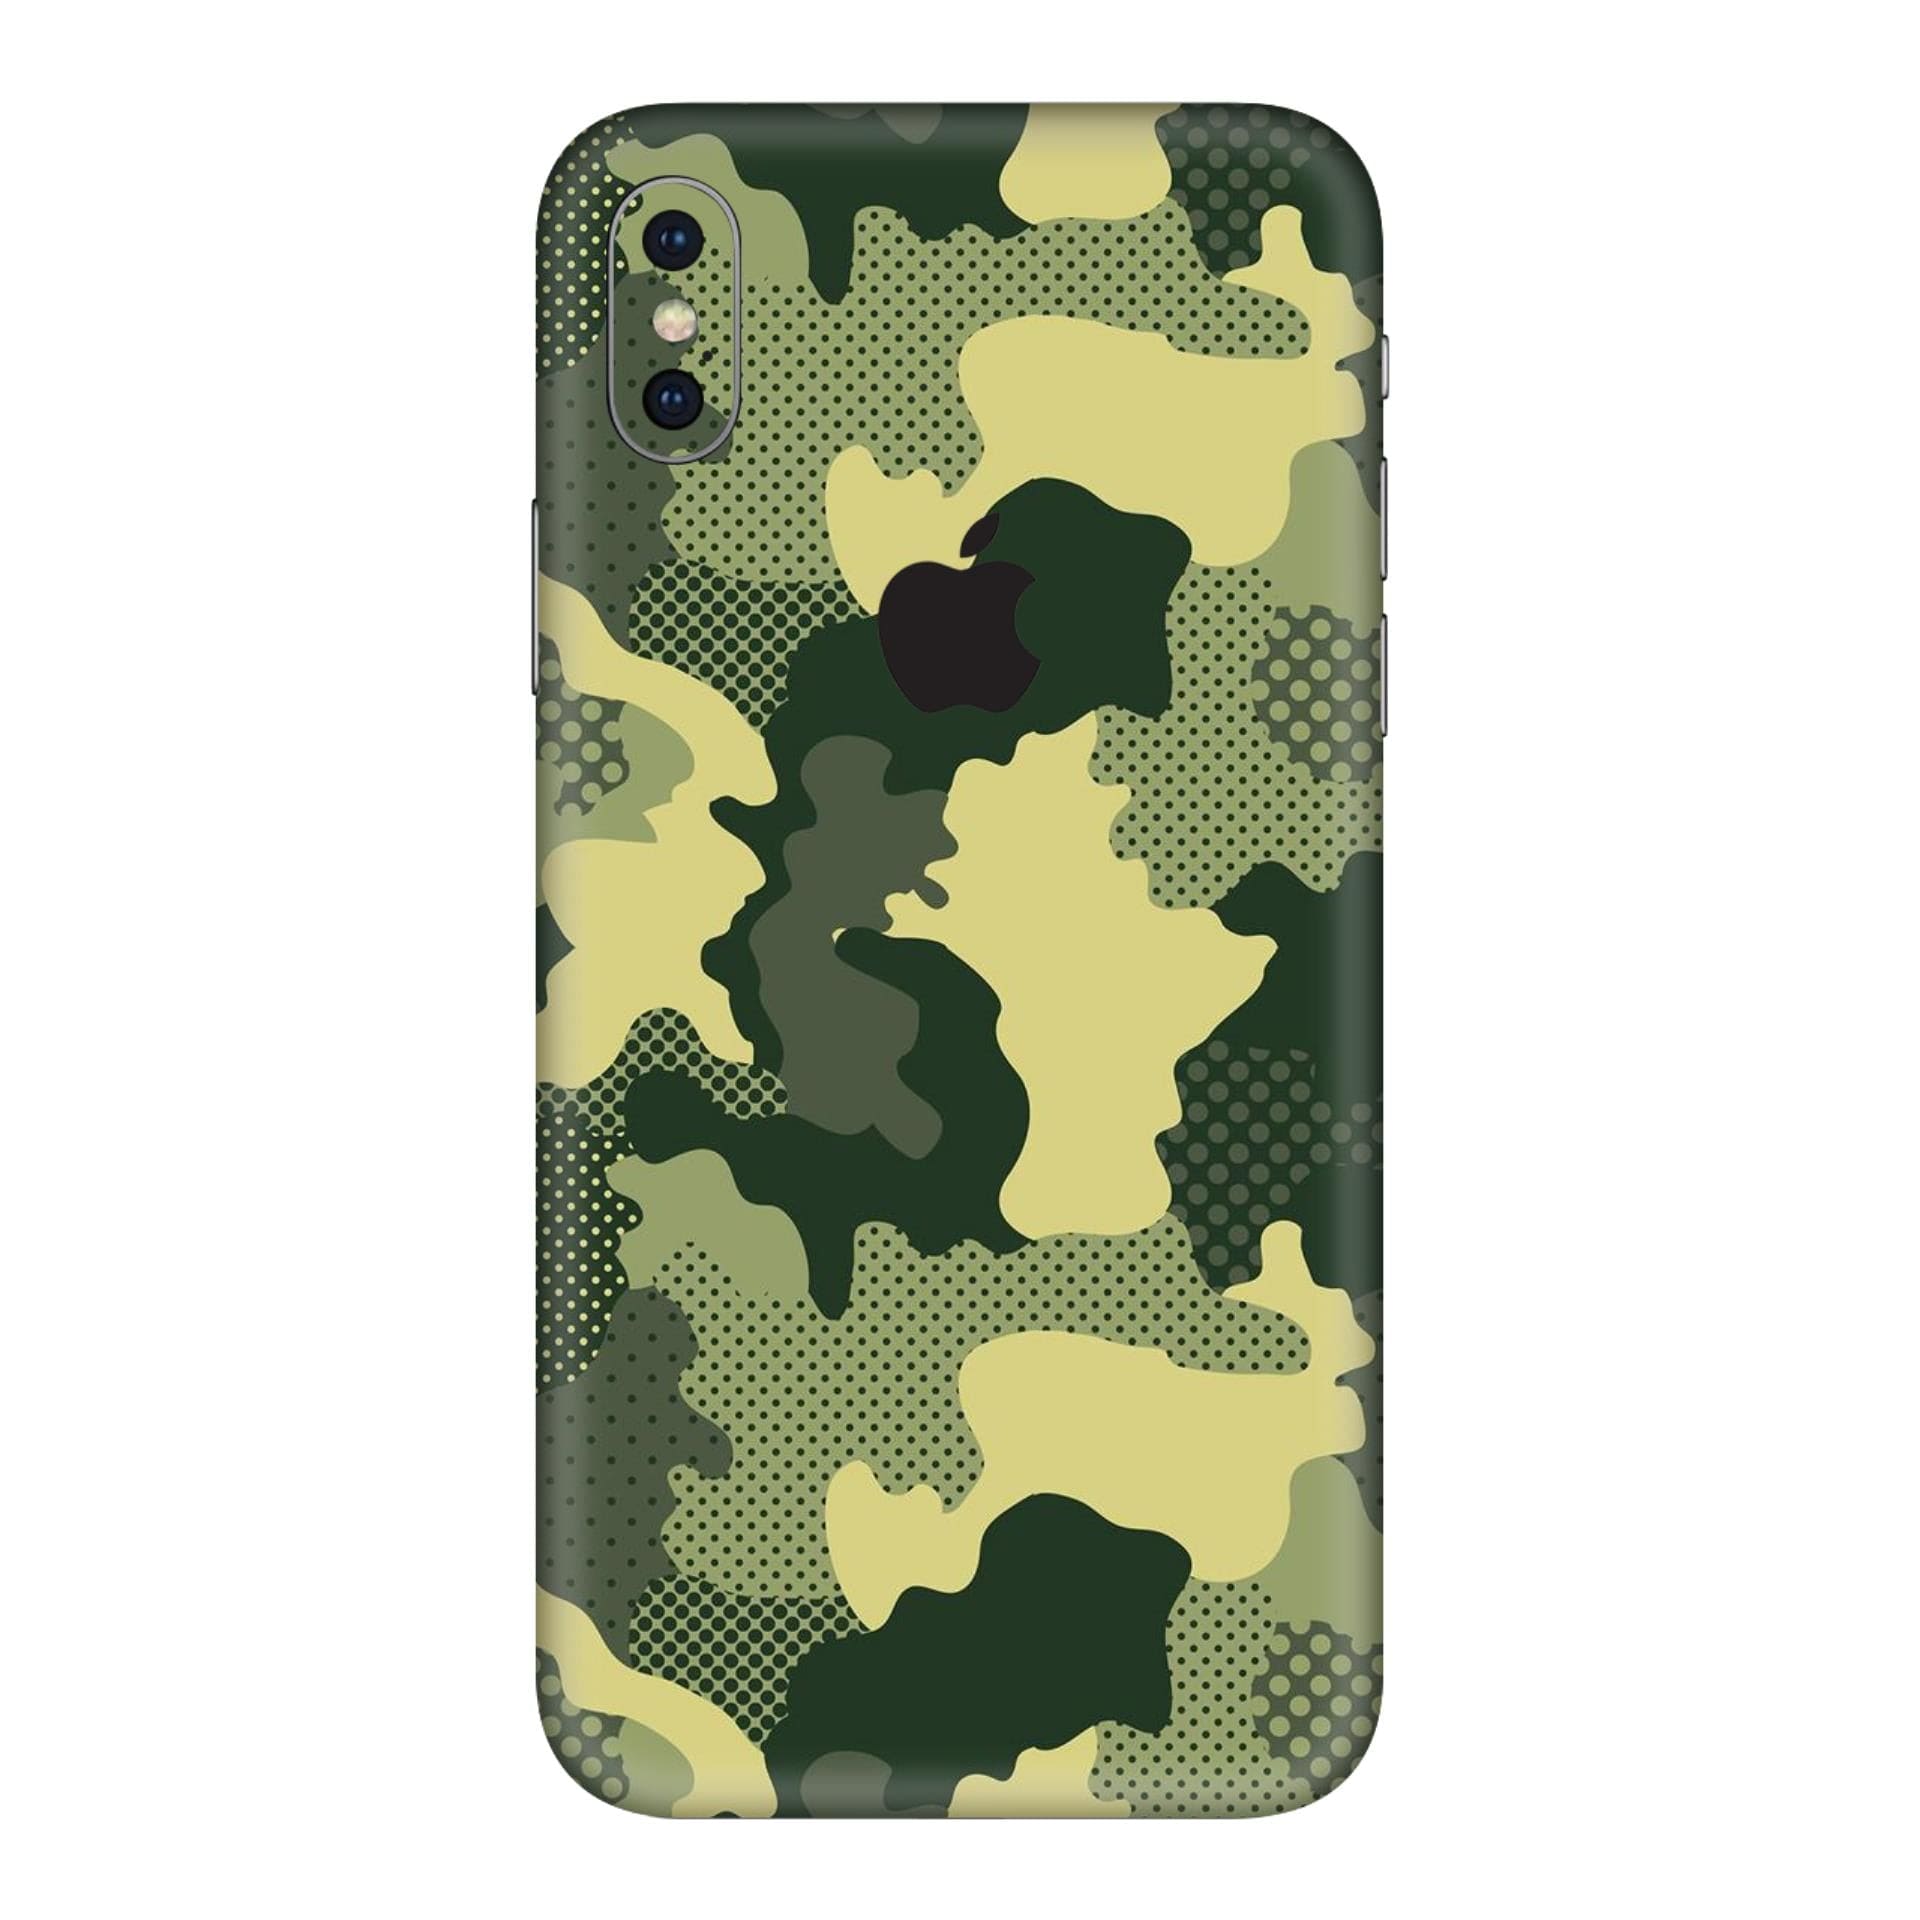 iphone XS Military Green Camo skins